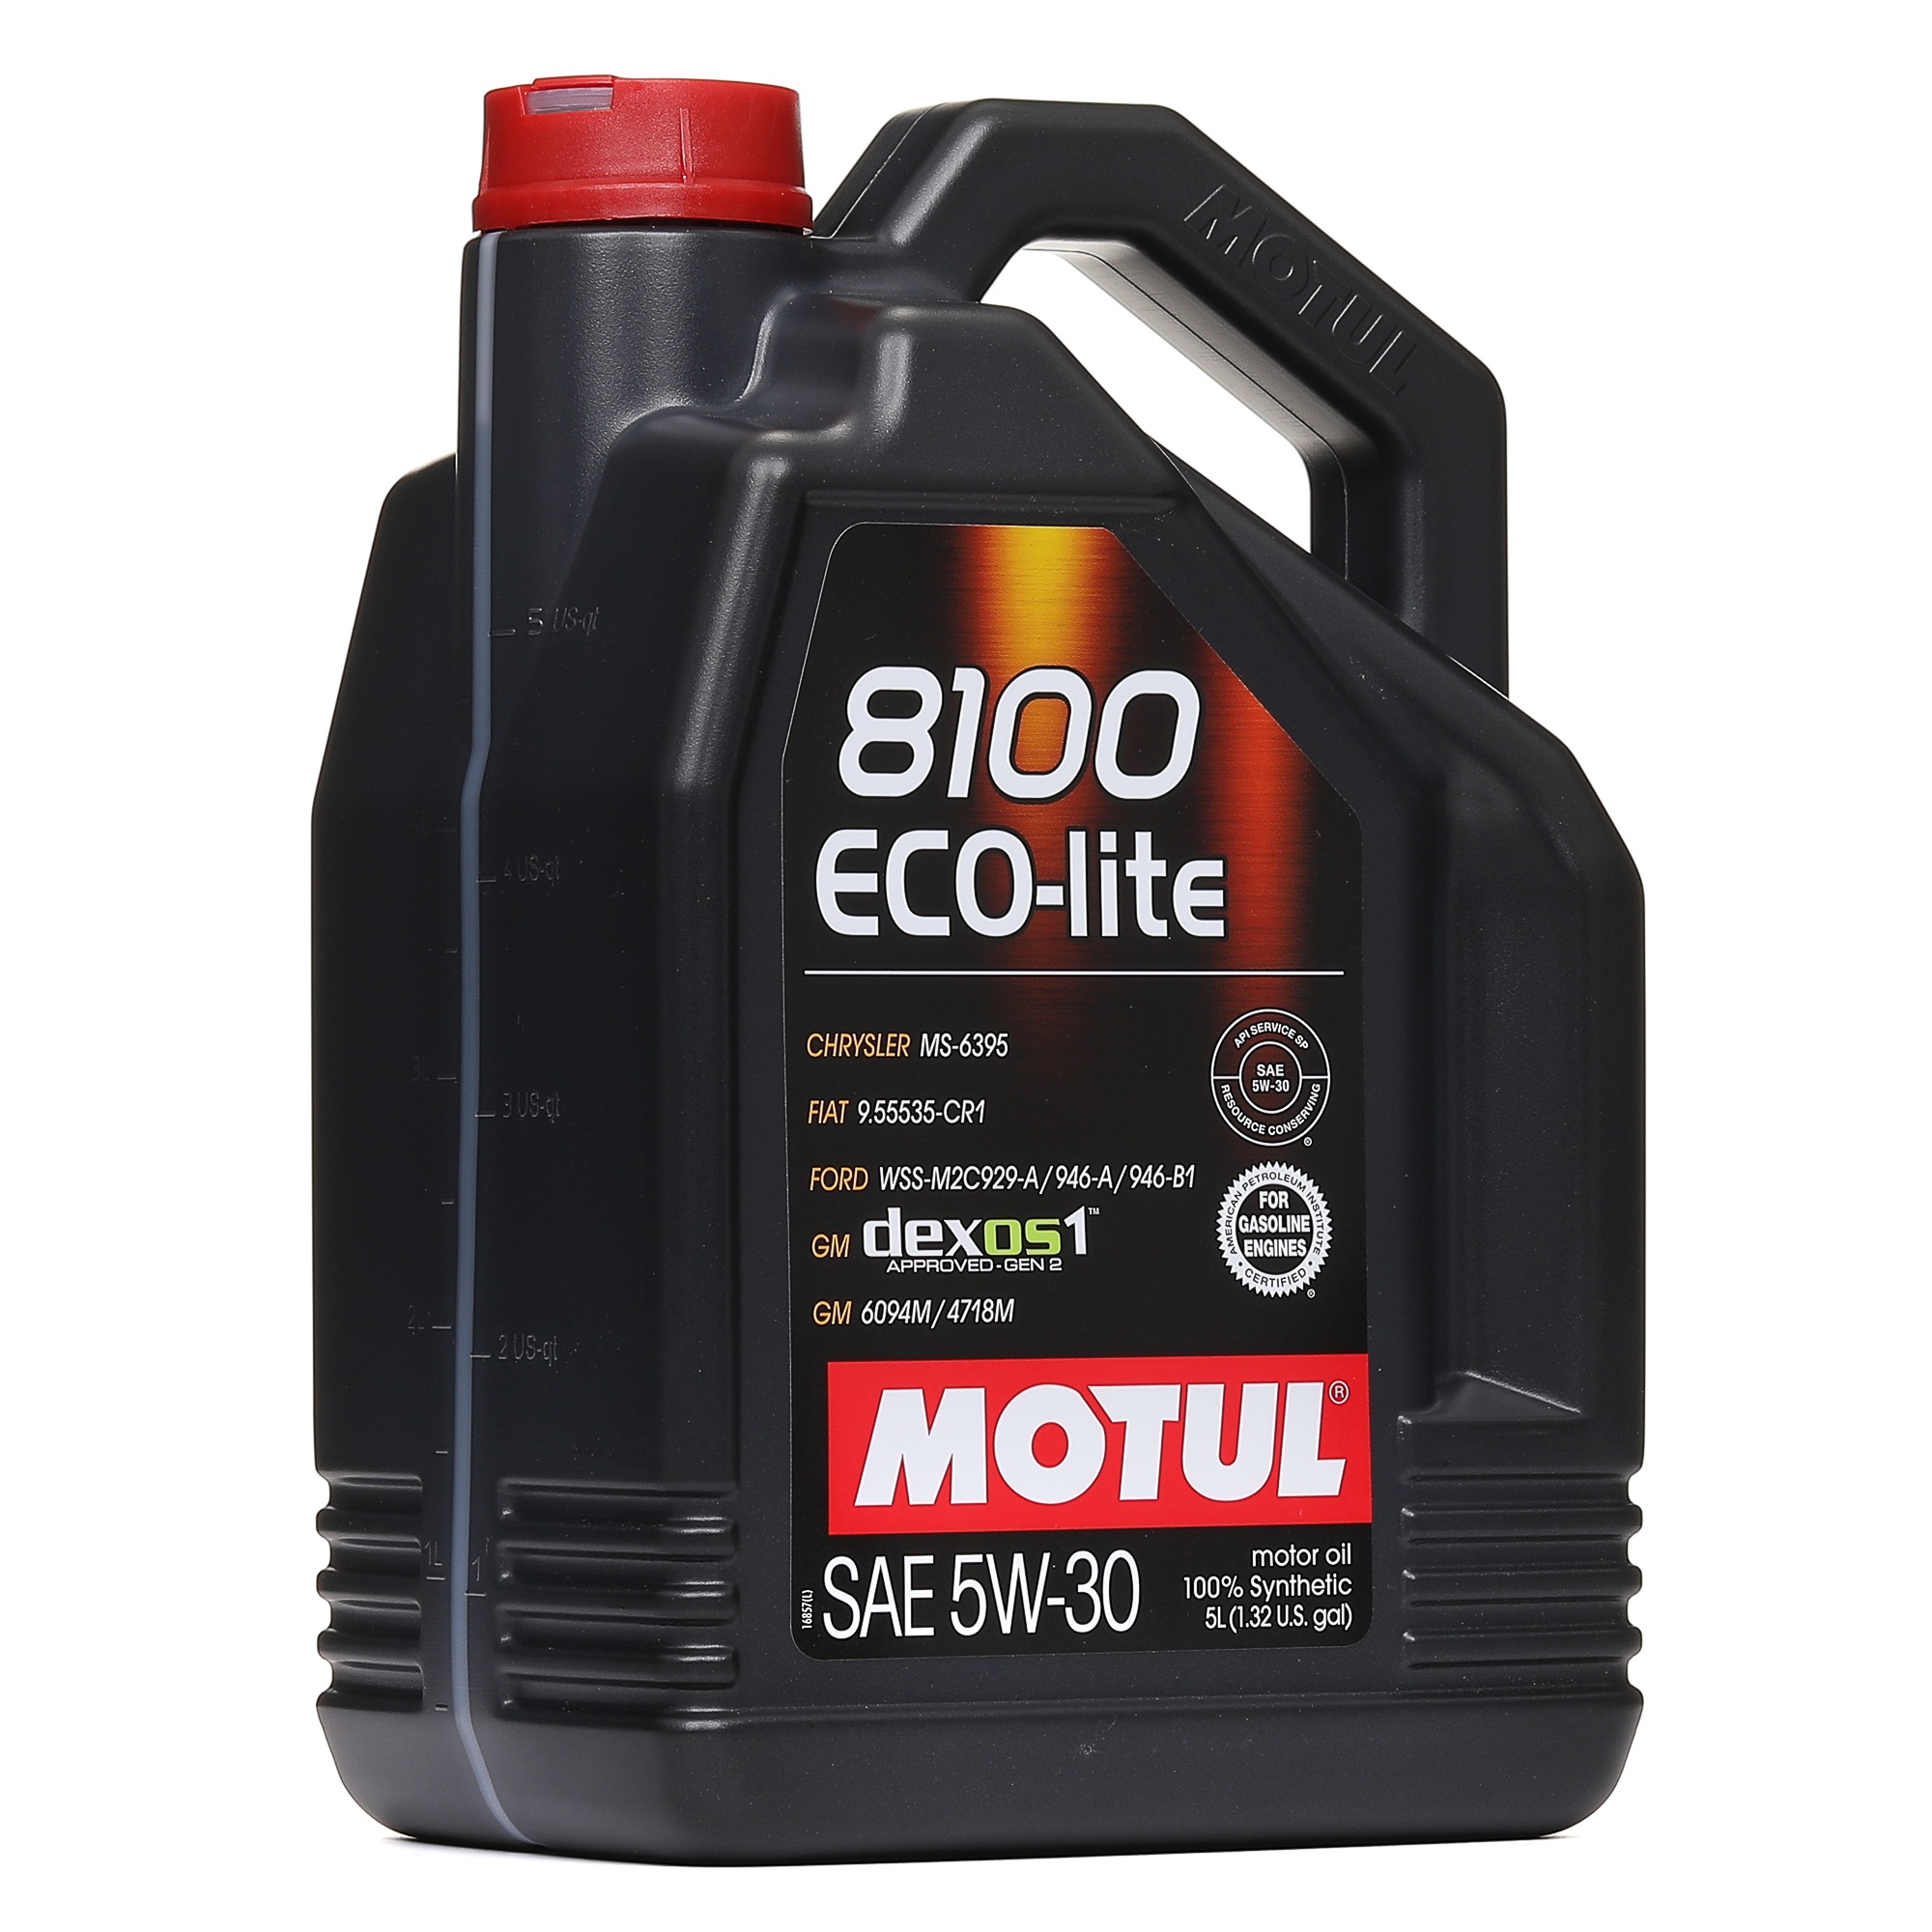 Aceite motor dexos1 gen 2 MOTUL - 108214 8100, ECO-LITE